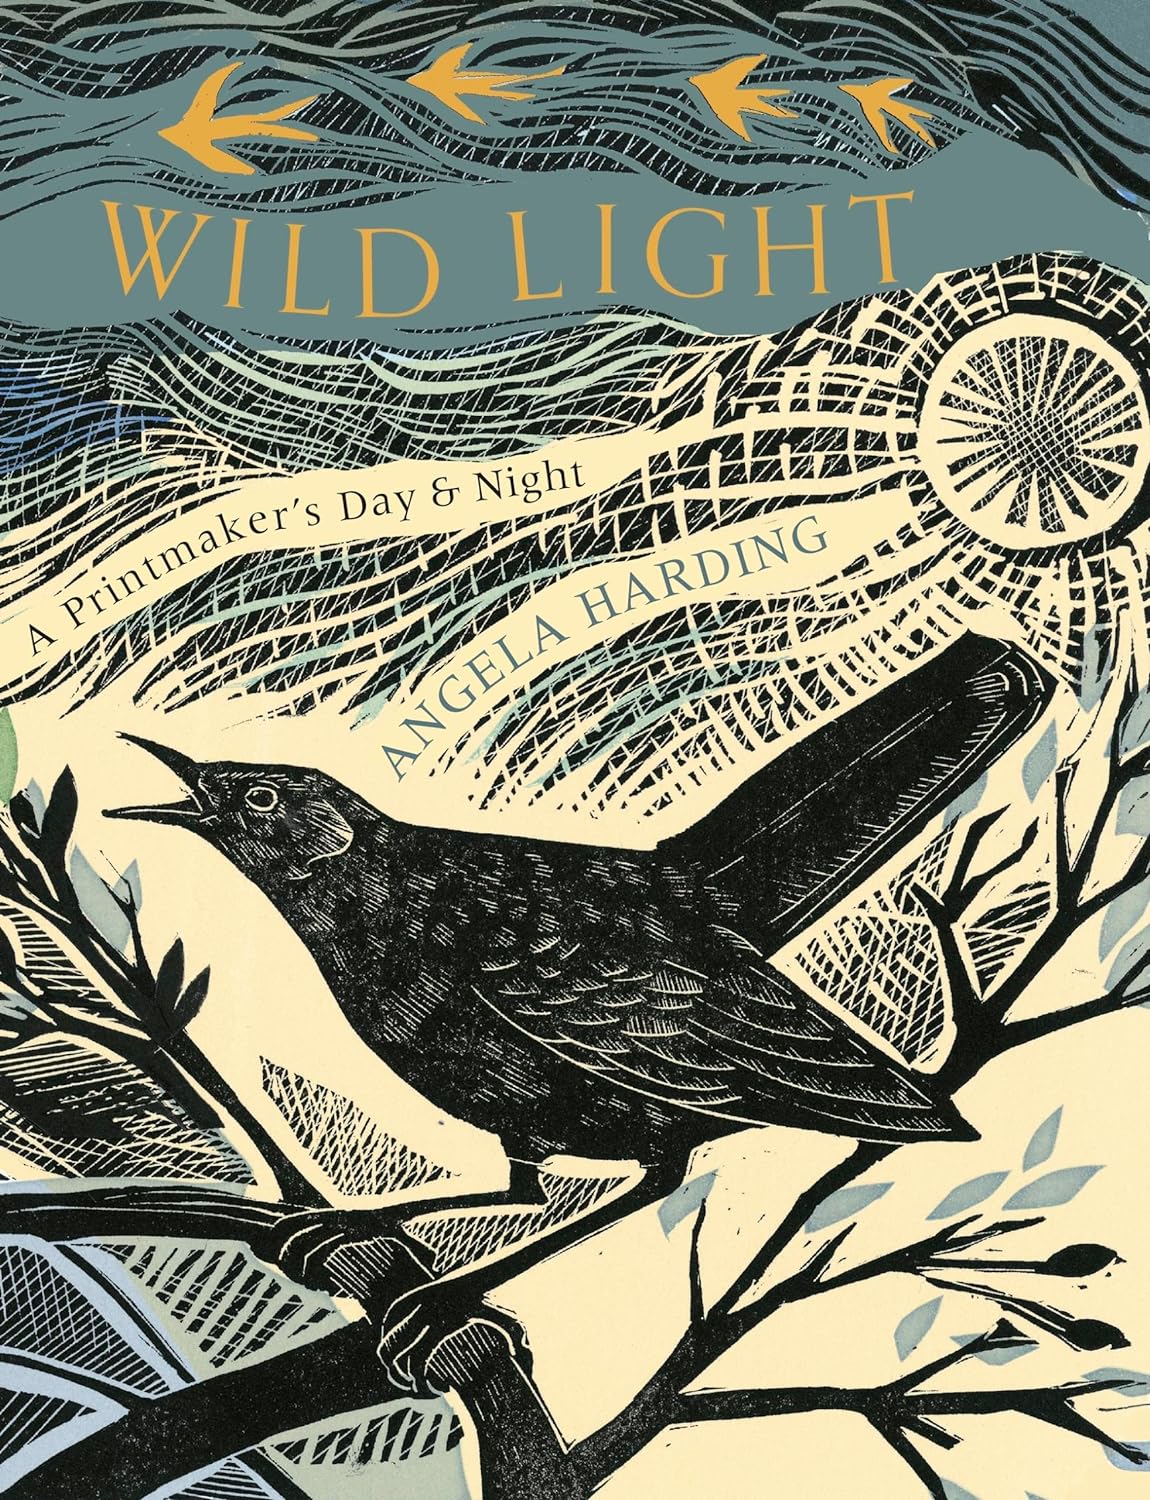 Wild Light: a printmaker’s day & night